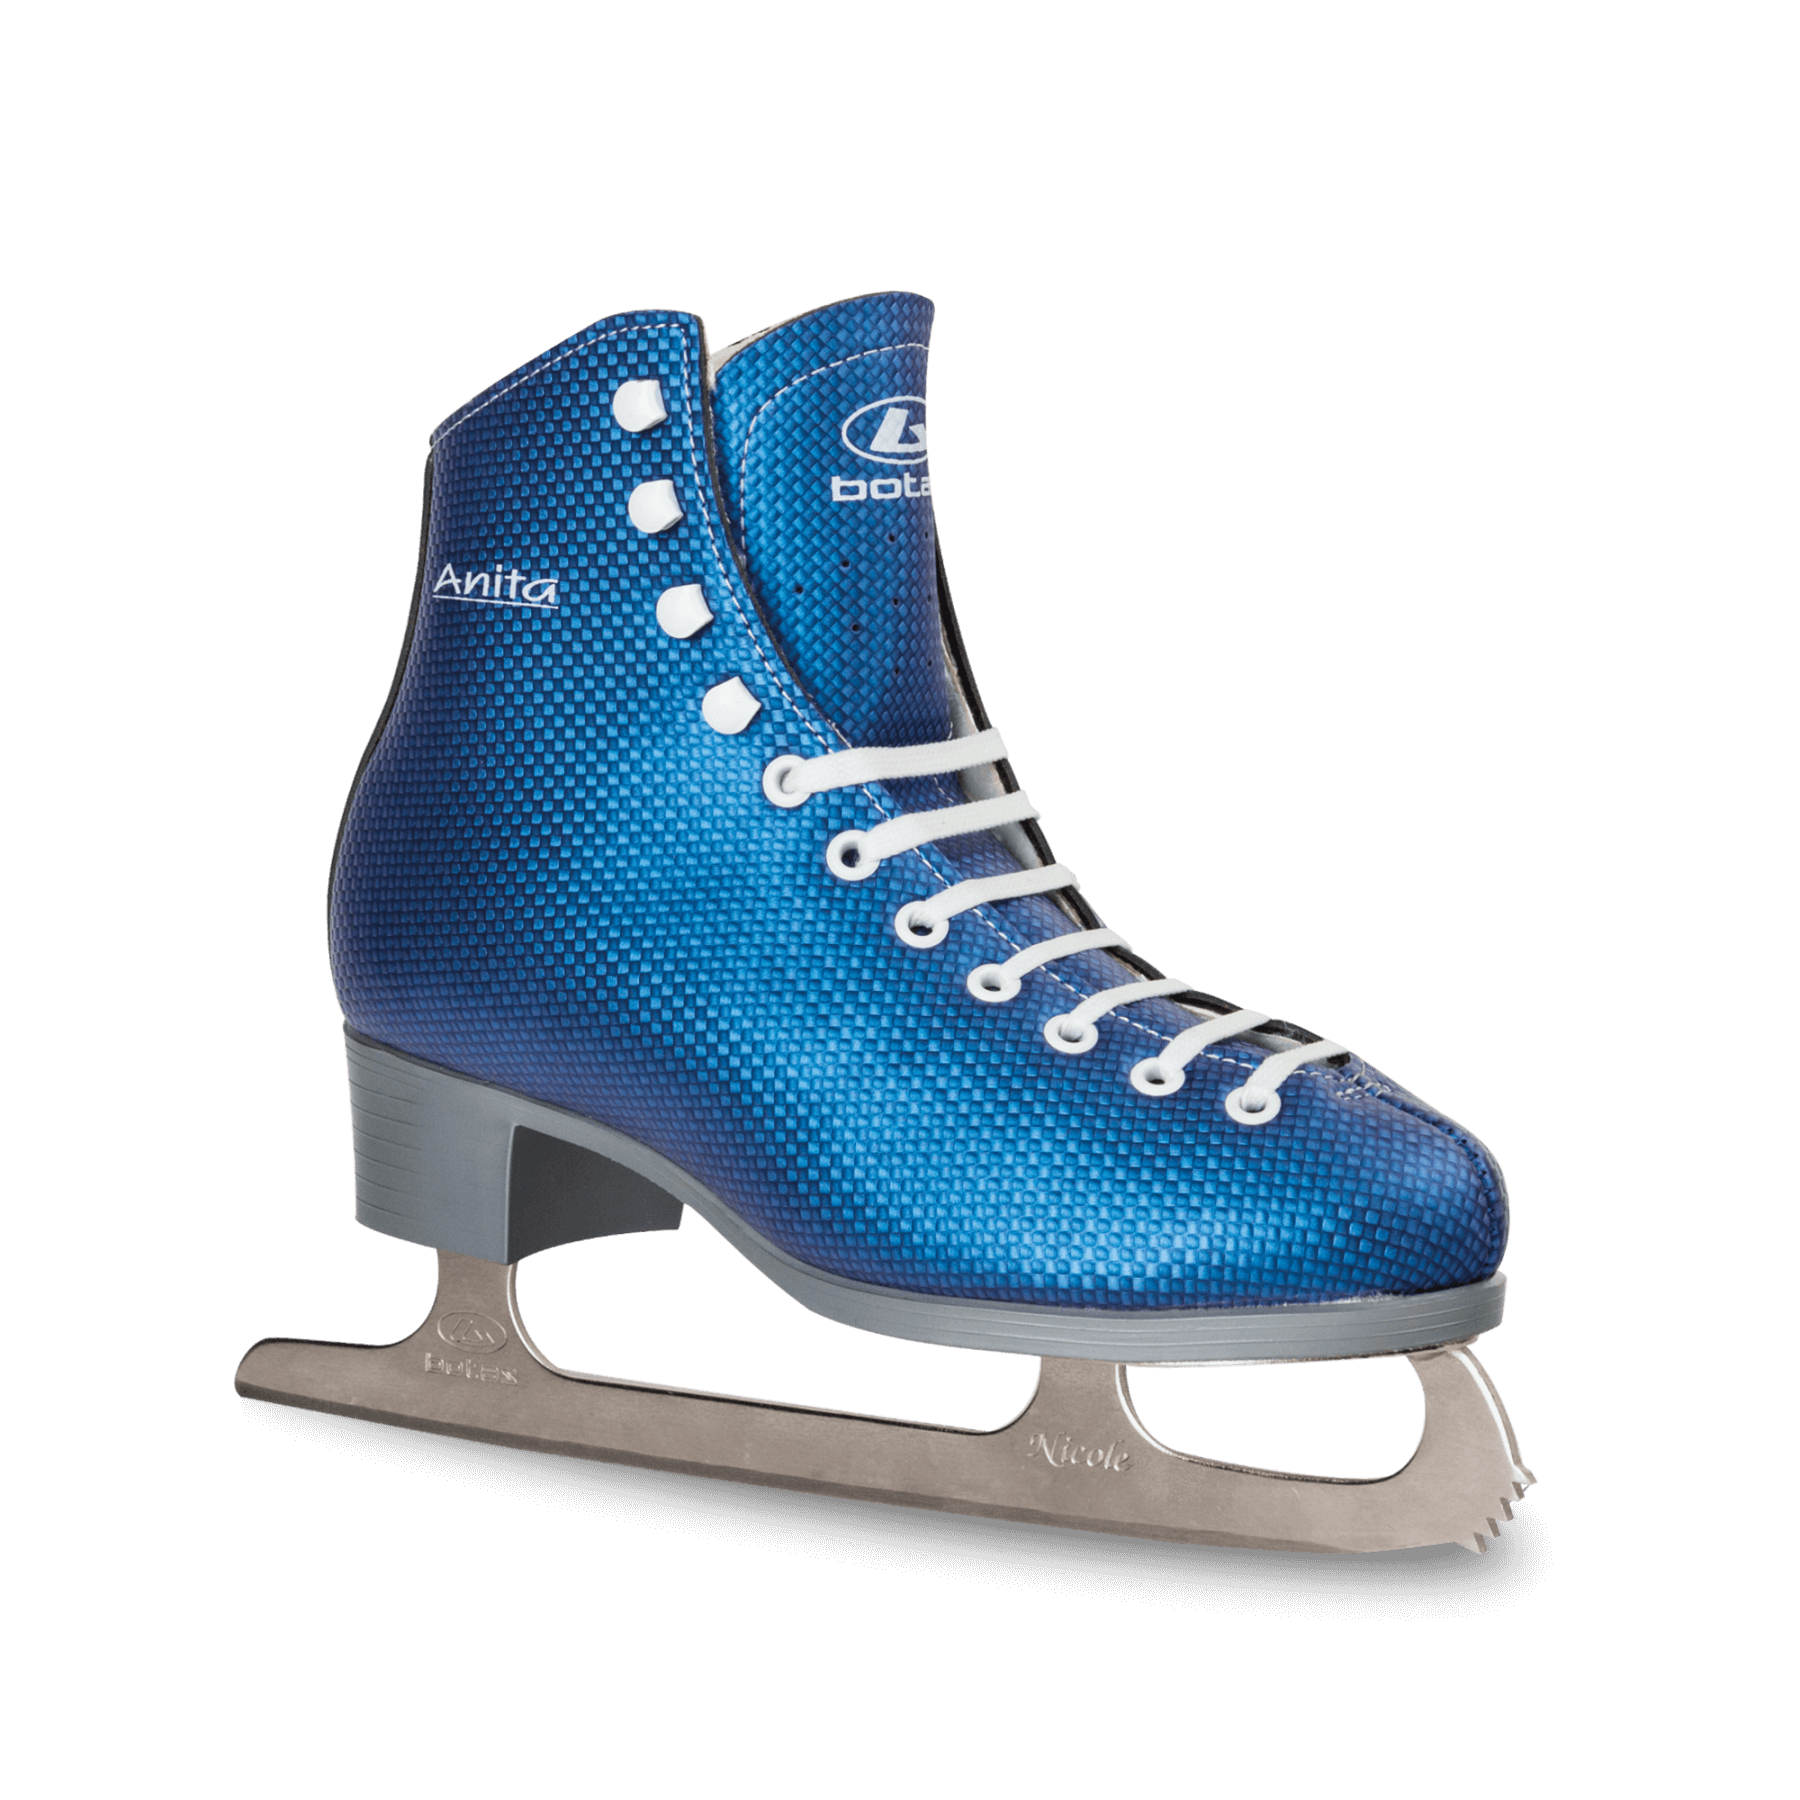 Ice Skating Shoes PNG Background Image SVG Clip arts